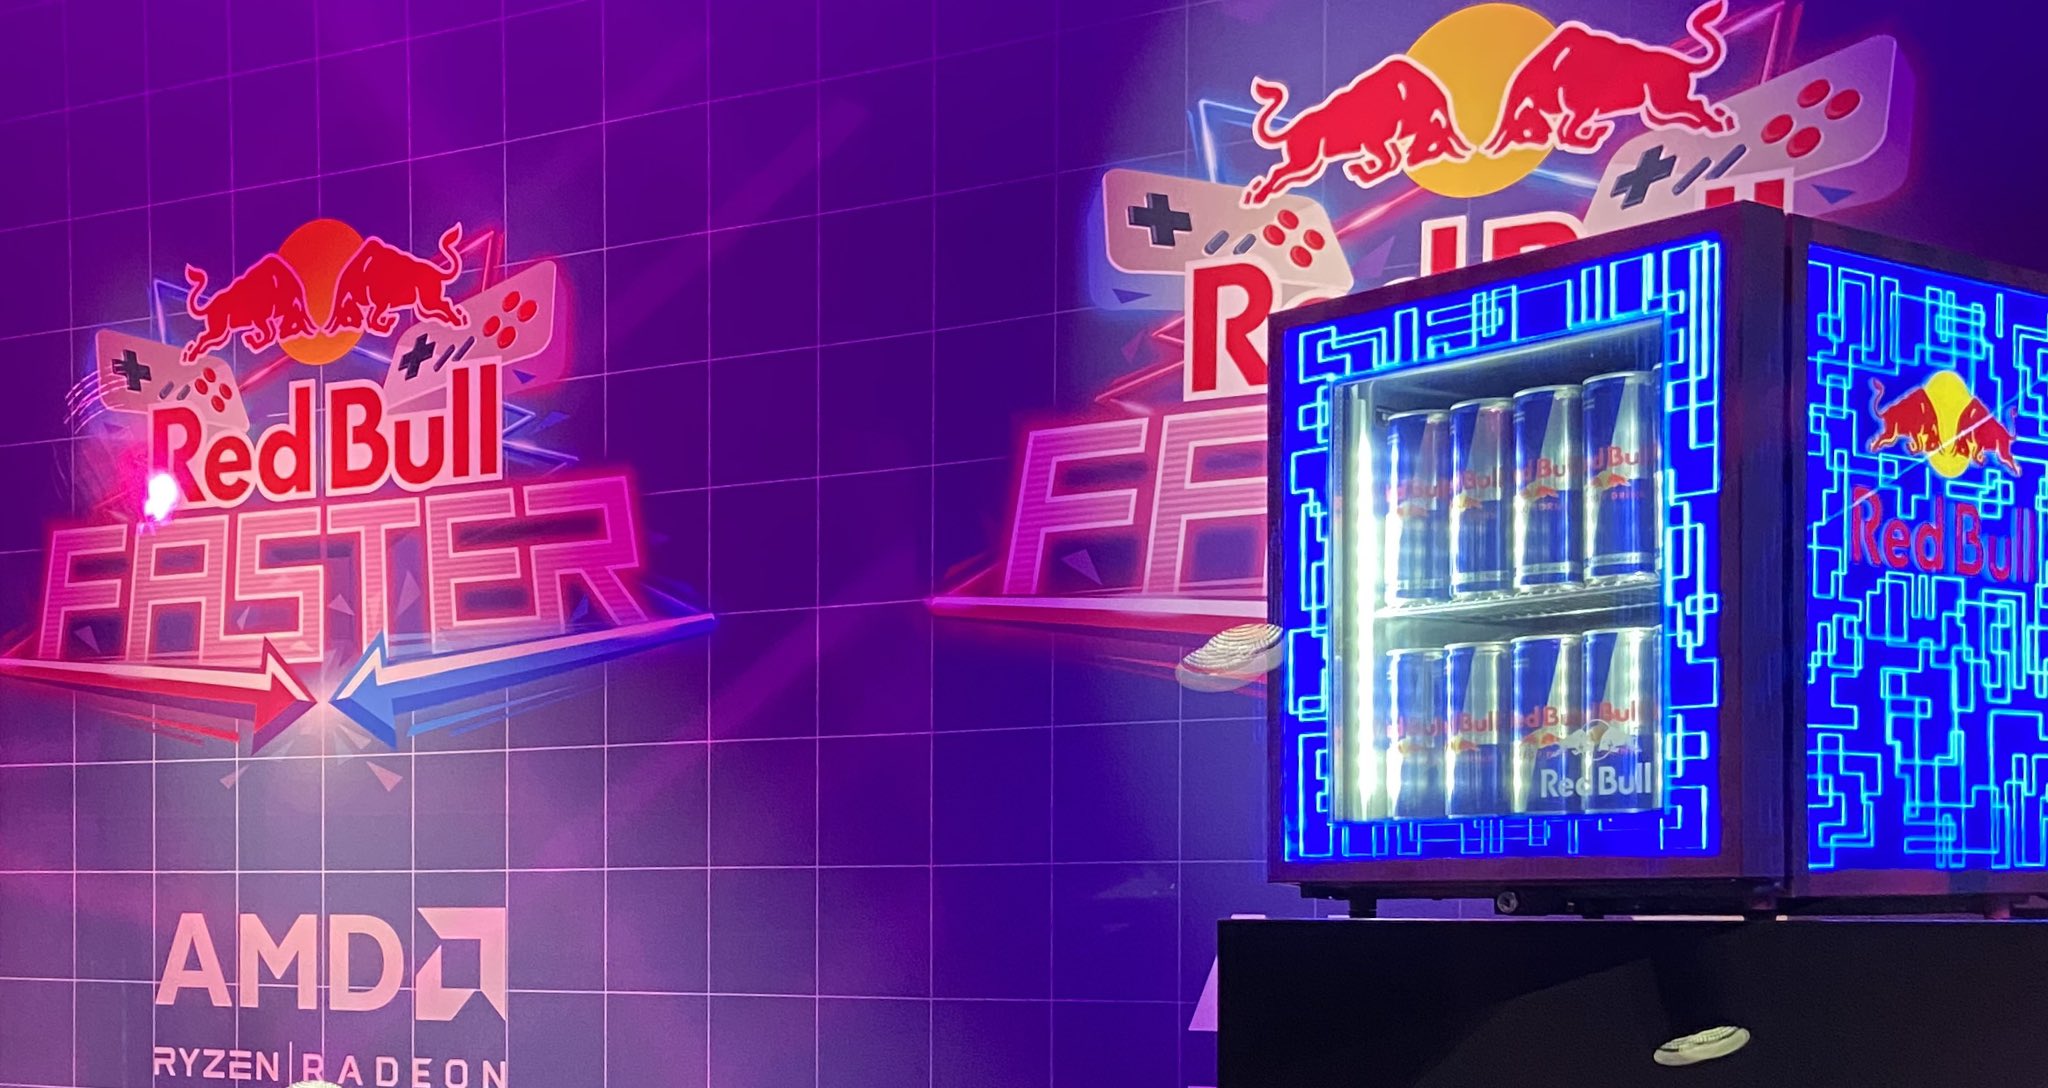 Red Bull verleiht Flüüügel on X: Ja Dings ist nice, aber habt ihr